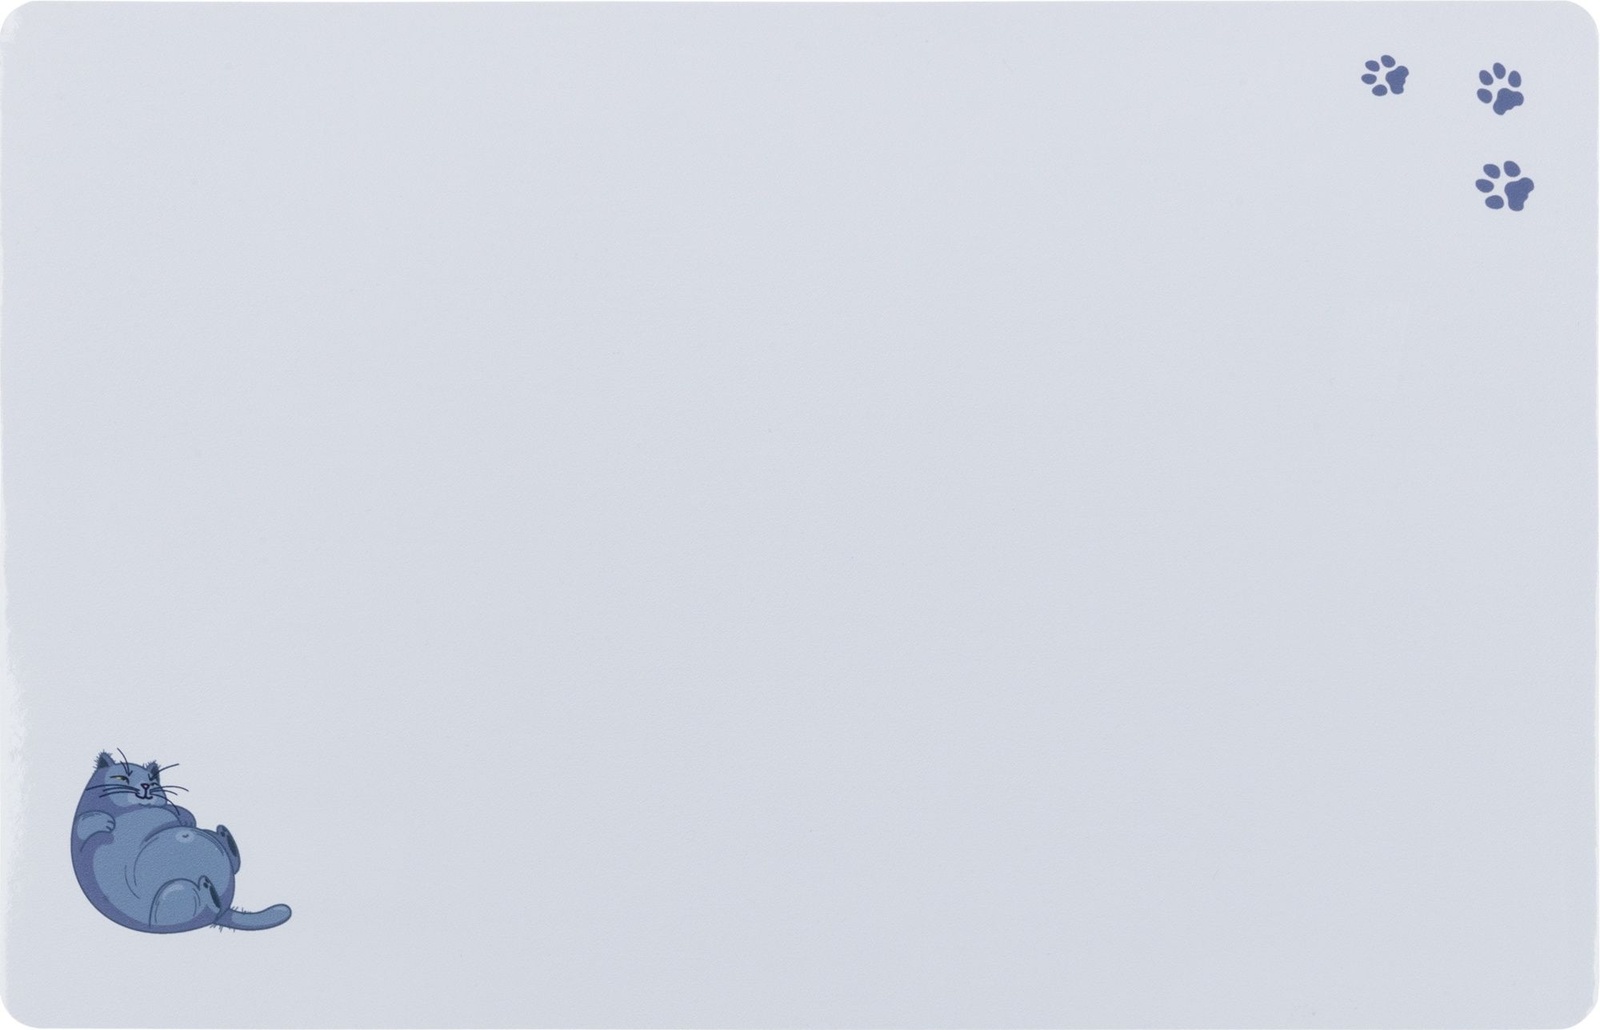 Trixie Trixie коврик под миску с рисунком Толстый кот/лапки, 44 x 28 см, серый (80 г) коврик под миску trixie для кошек 44х28 см серый